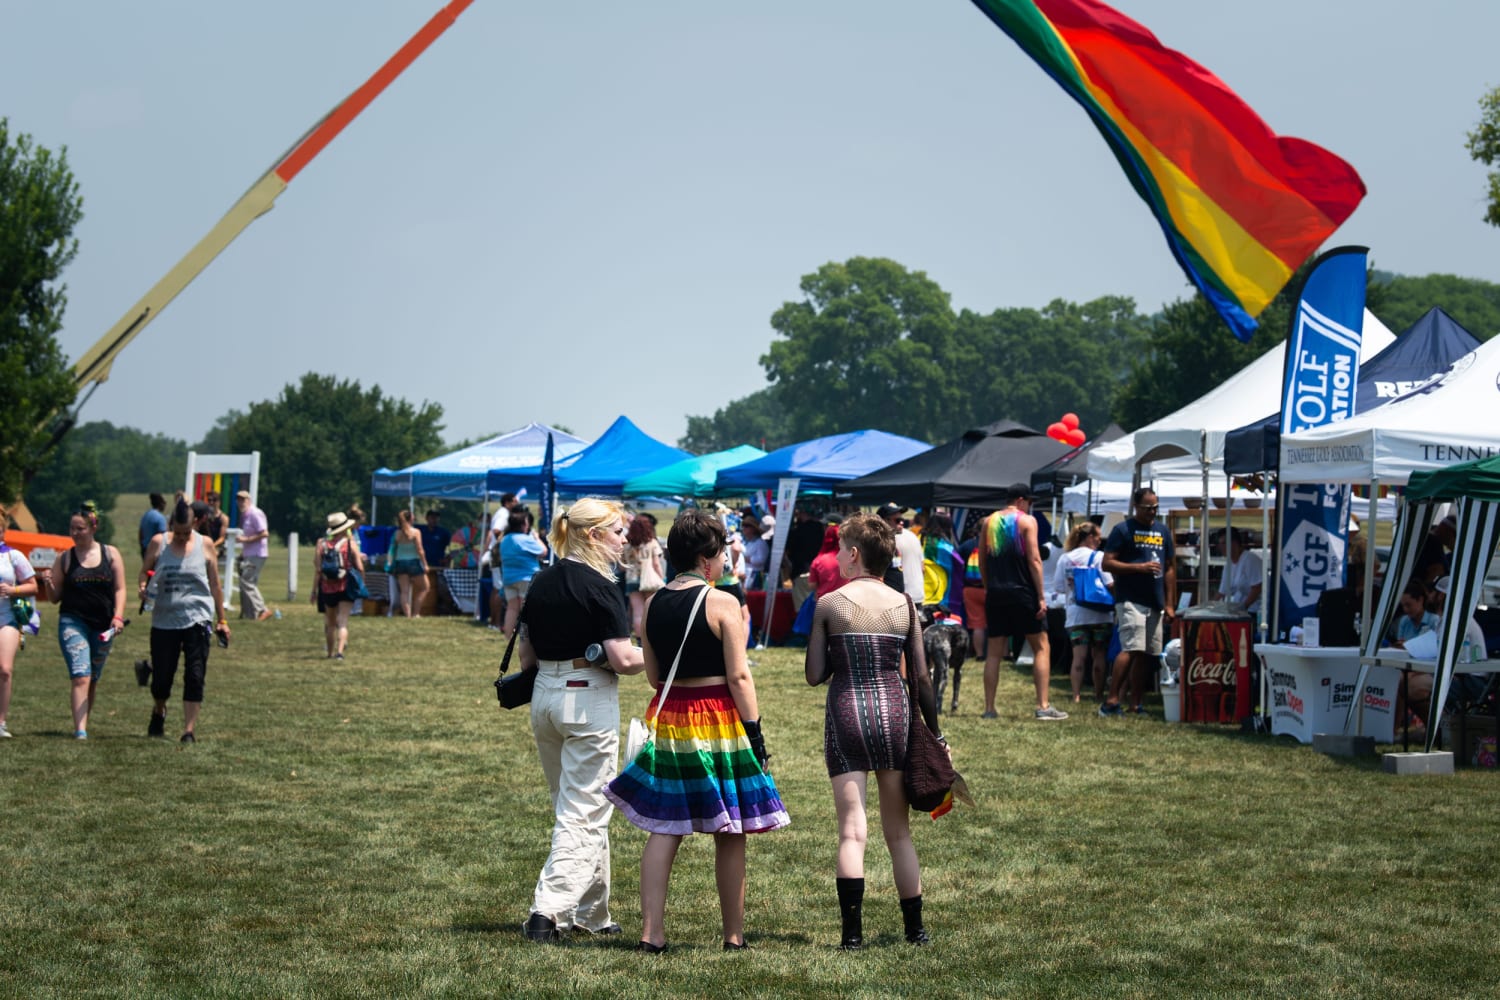 In Franklin, Tennessee, an LGBTQ pride festival meets fierce resistance